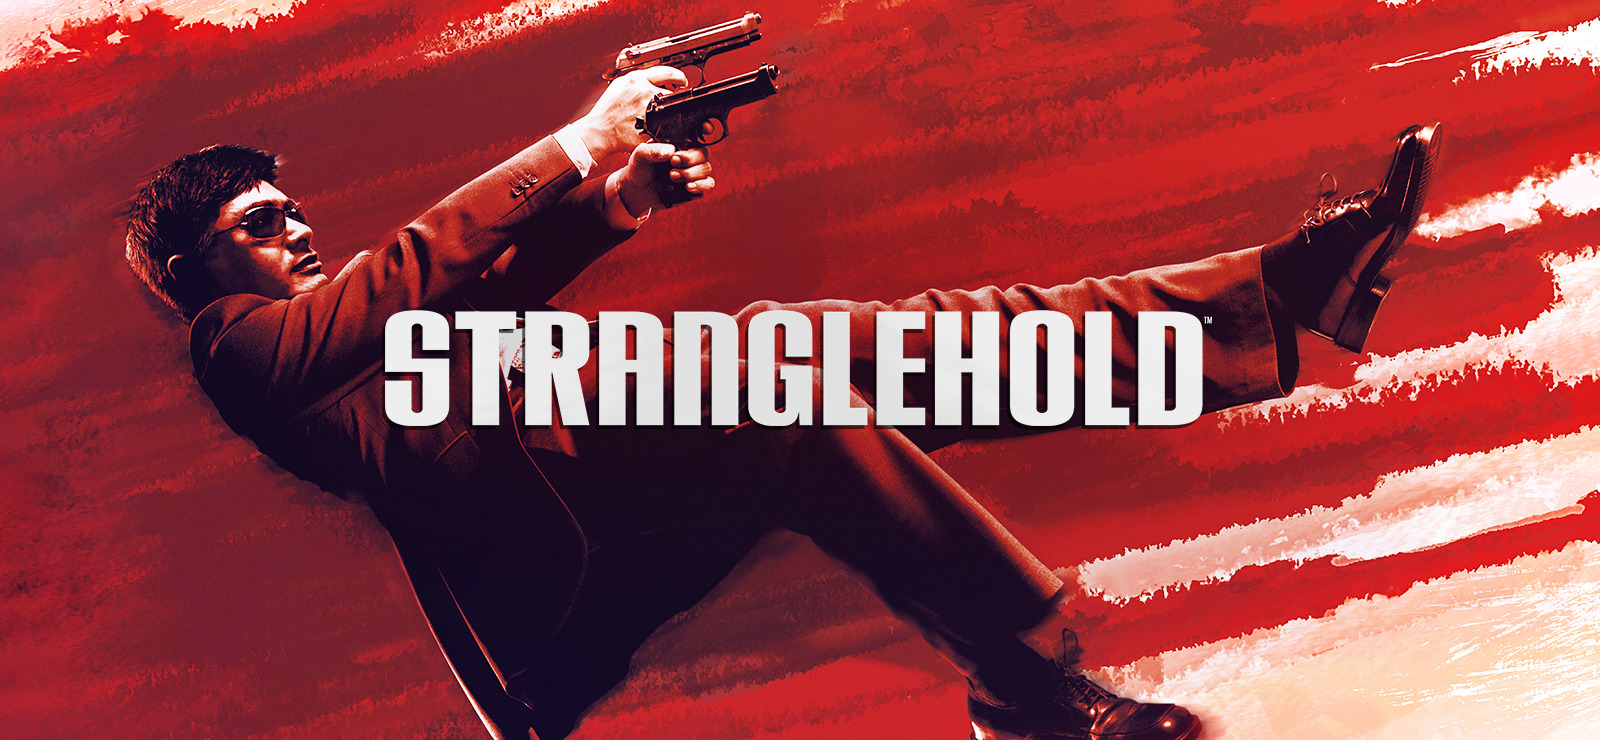 John Woo Presents: Stranglehold (PC Digital Download) $2.09 @ GOG.com